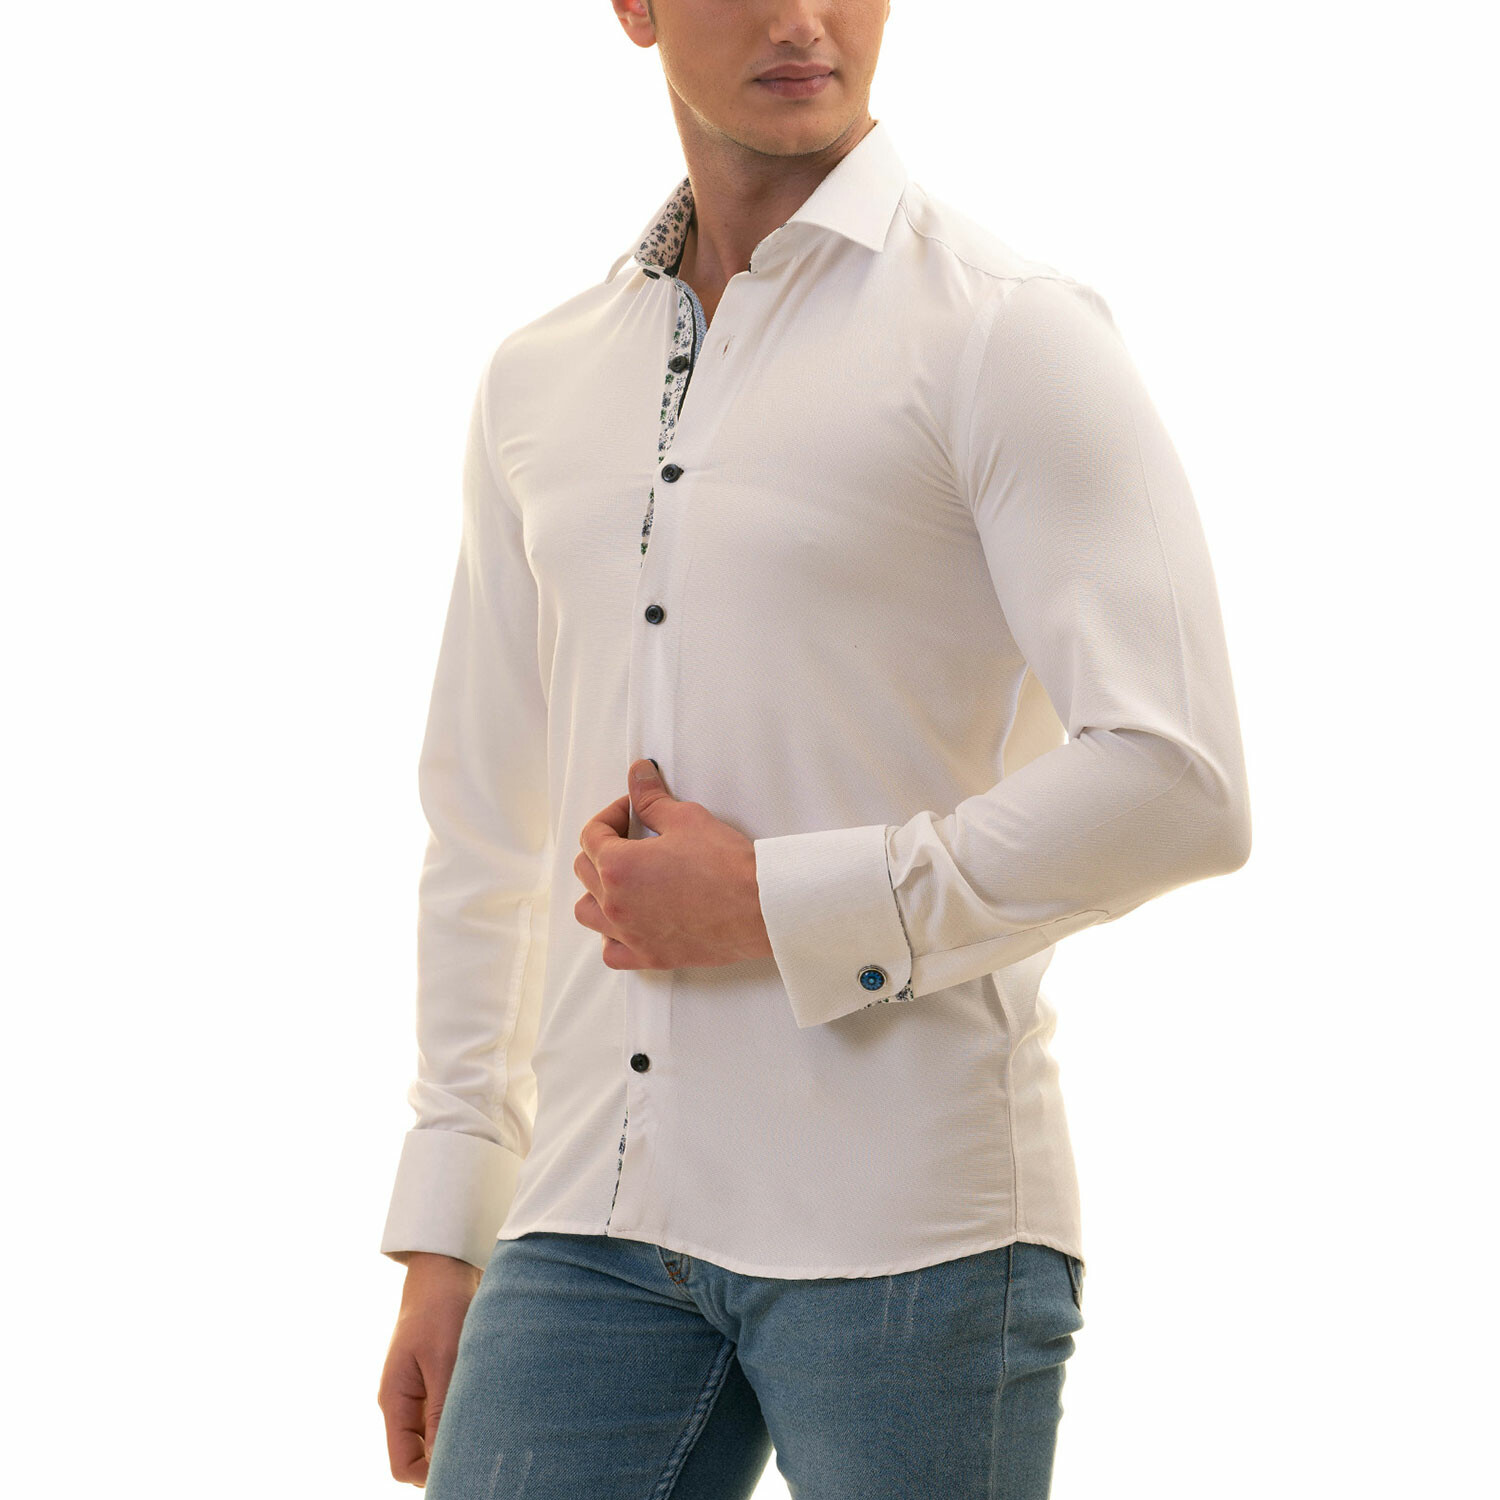 European Made & Designed Reversible Cuff French Cuff Dress Shirt ...